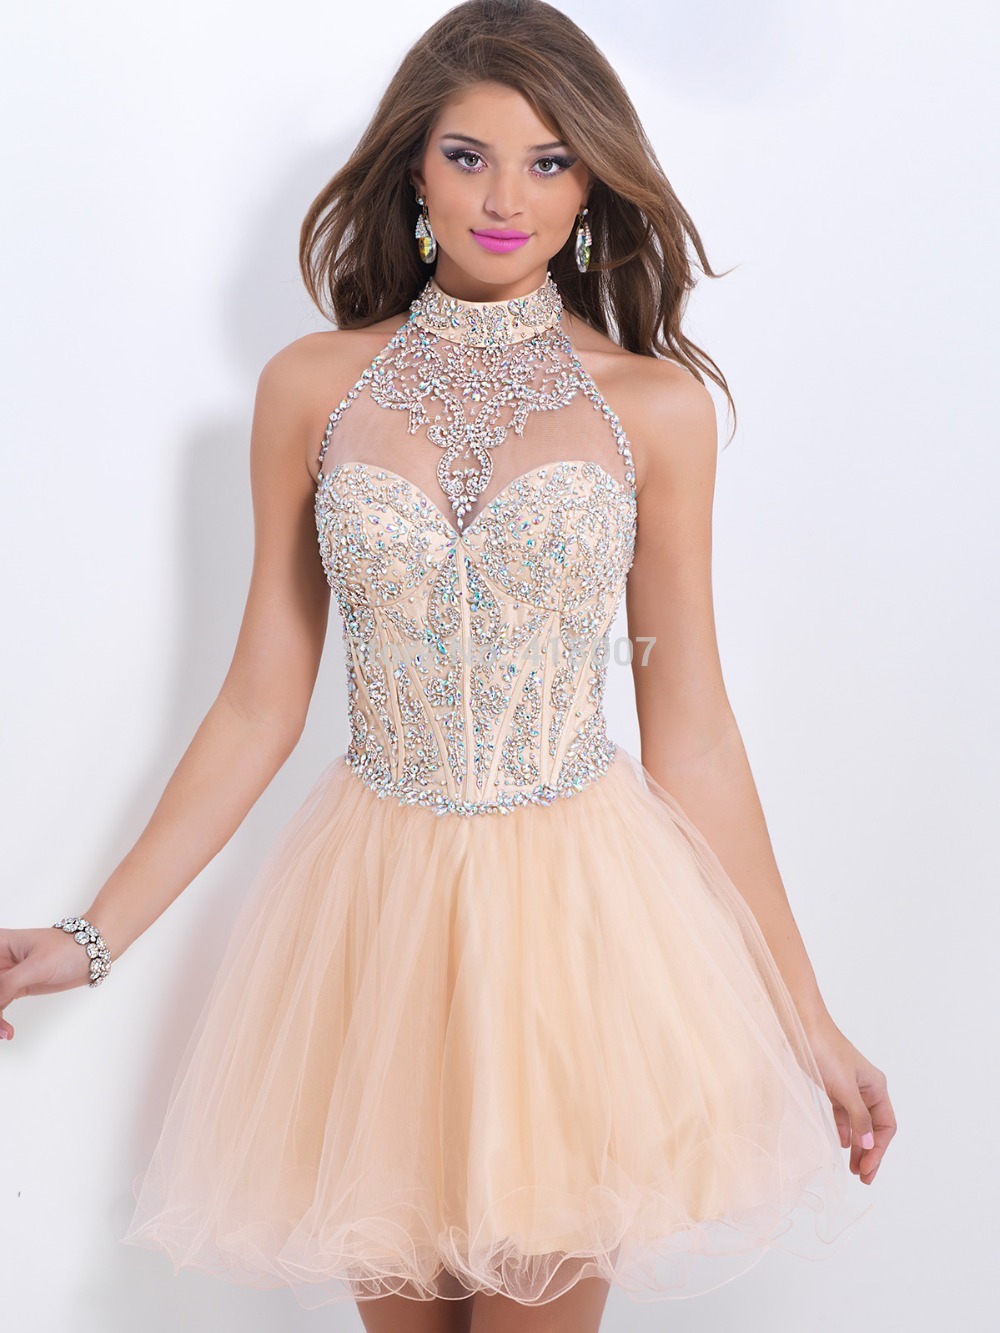 ... -pattern-beaded-crystal-short-prom-dress-2015-cocktail-dresses.jpg